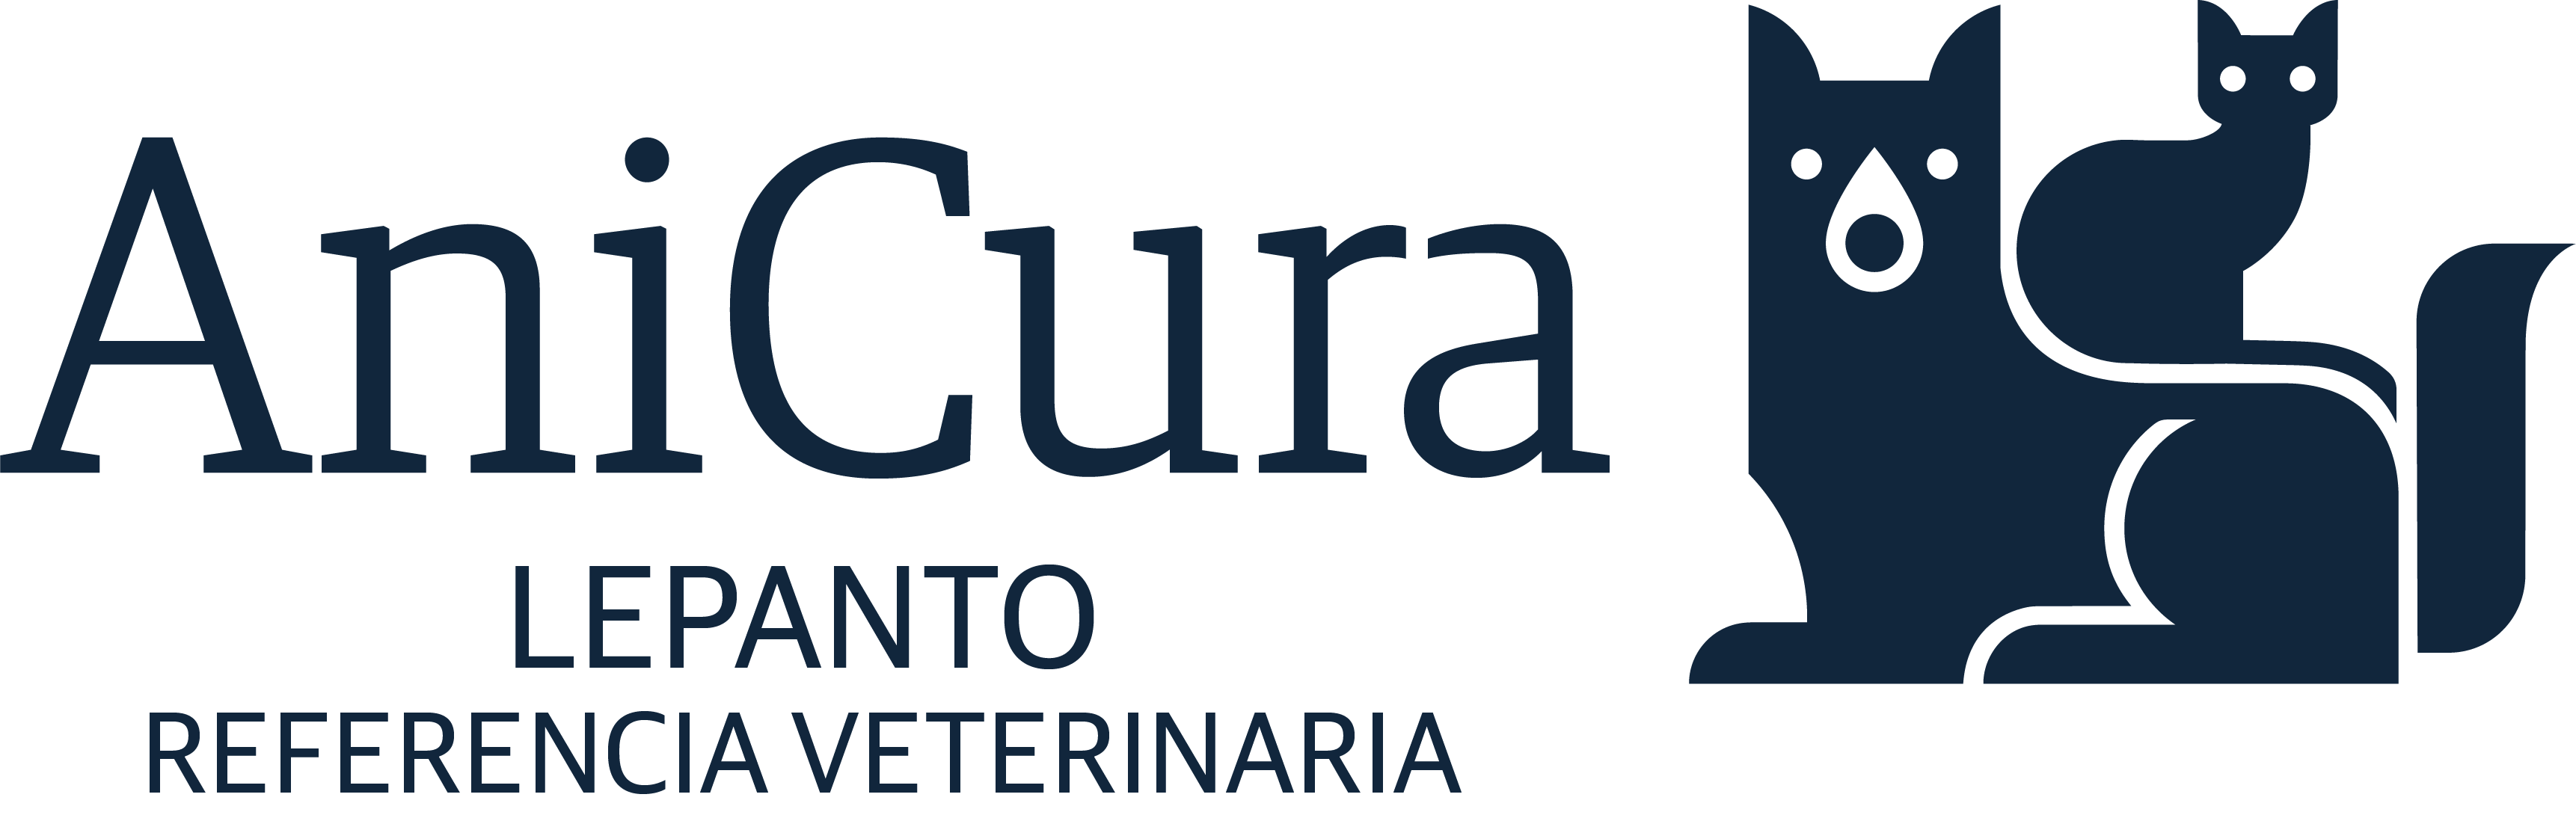 AniCura Lepanto Referencia Veterinaria logo